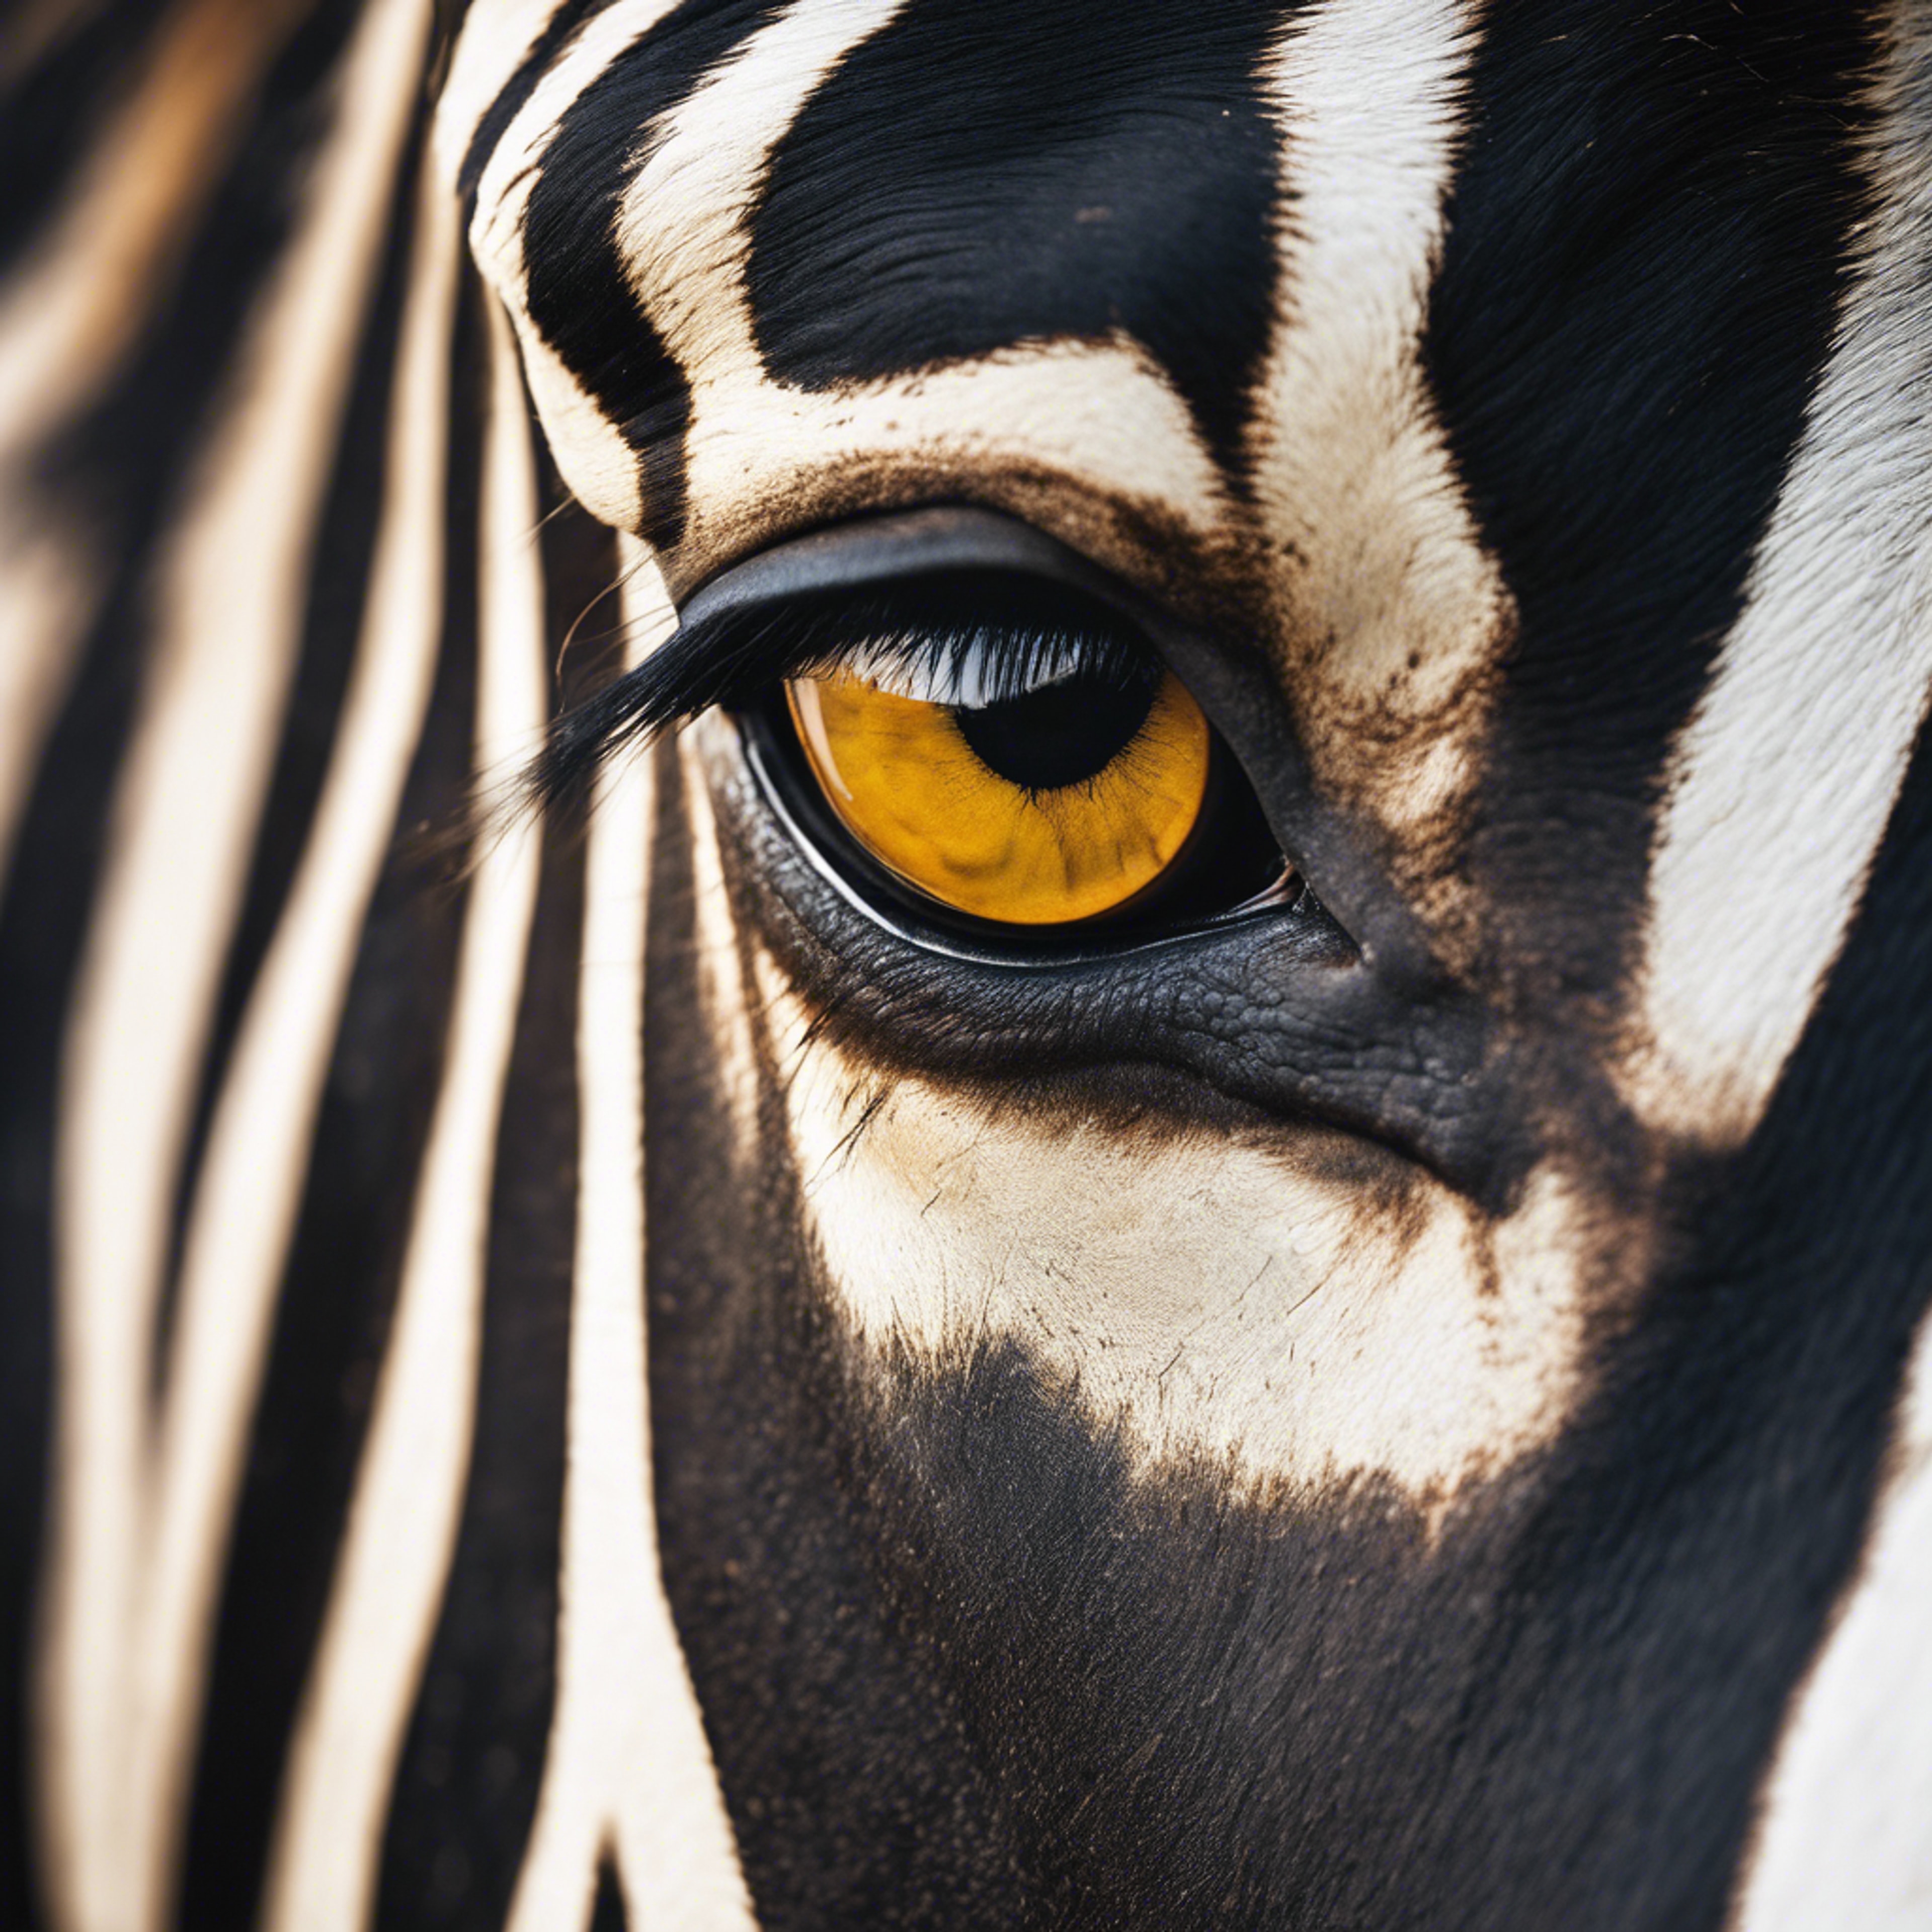 A closeup of a zebra's eye, showcasing its beautiful black and yellow striped pattern. کاغذ دیواری[50ee4a2668b0446d82c3]